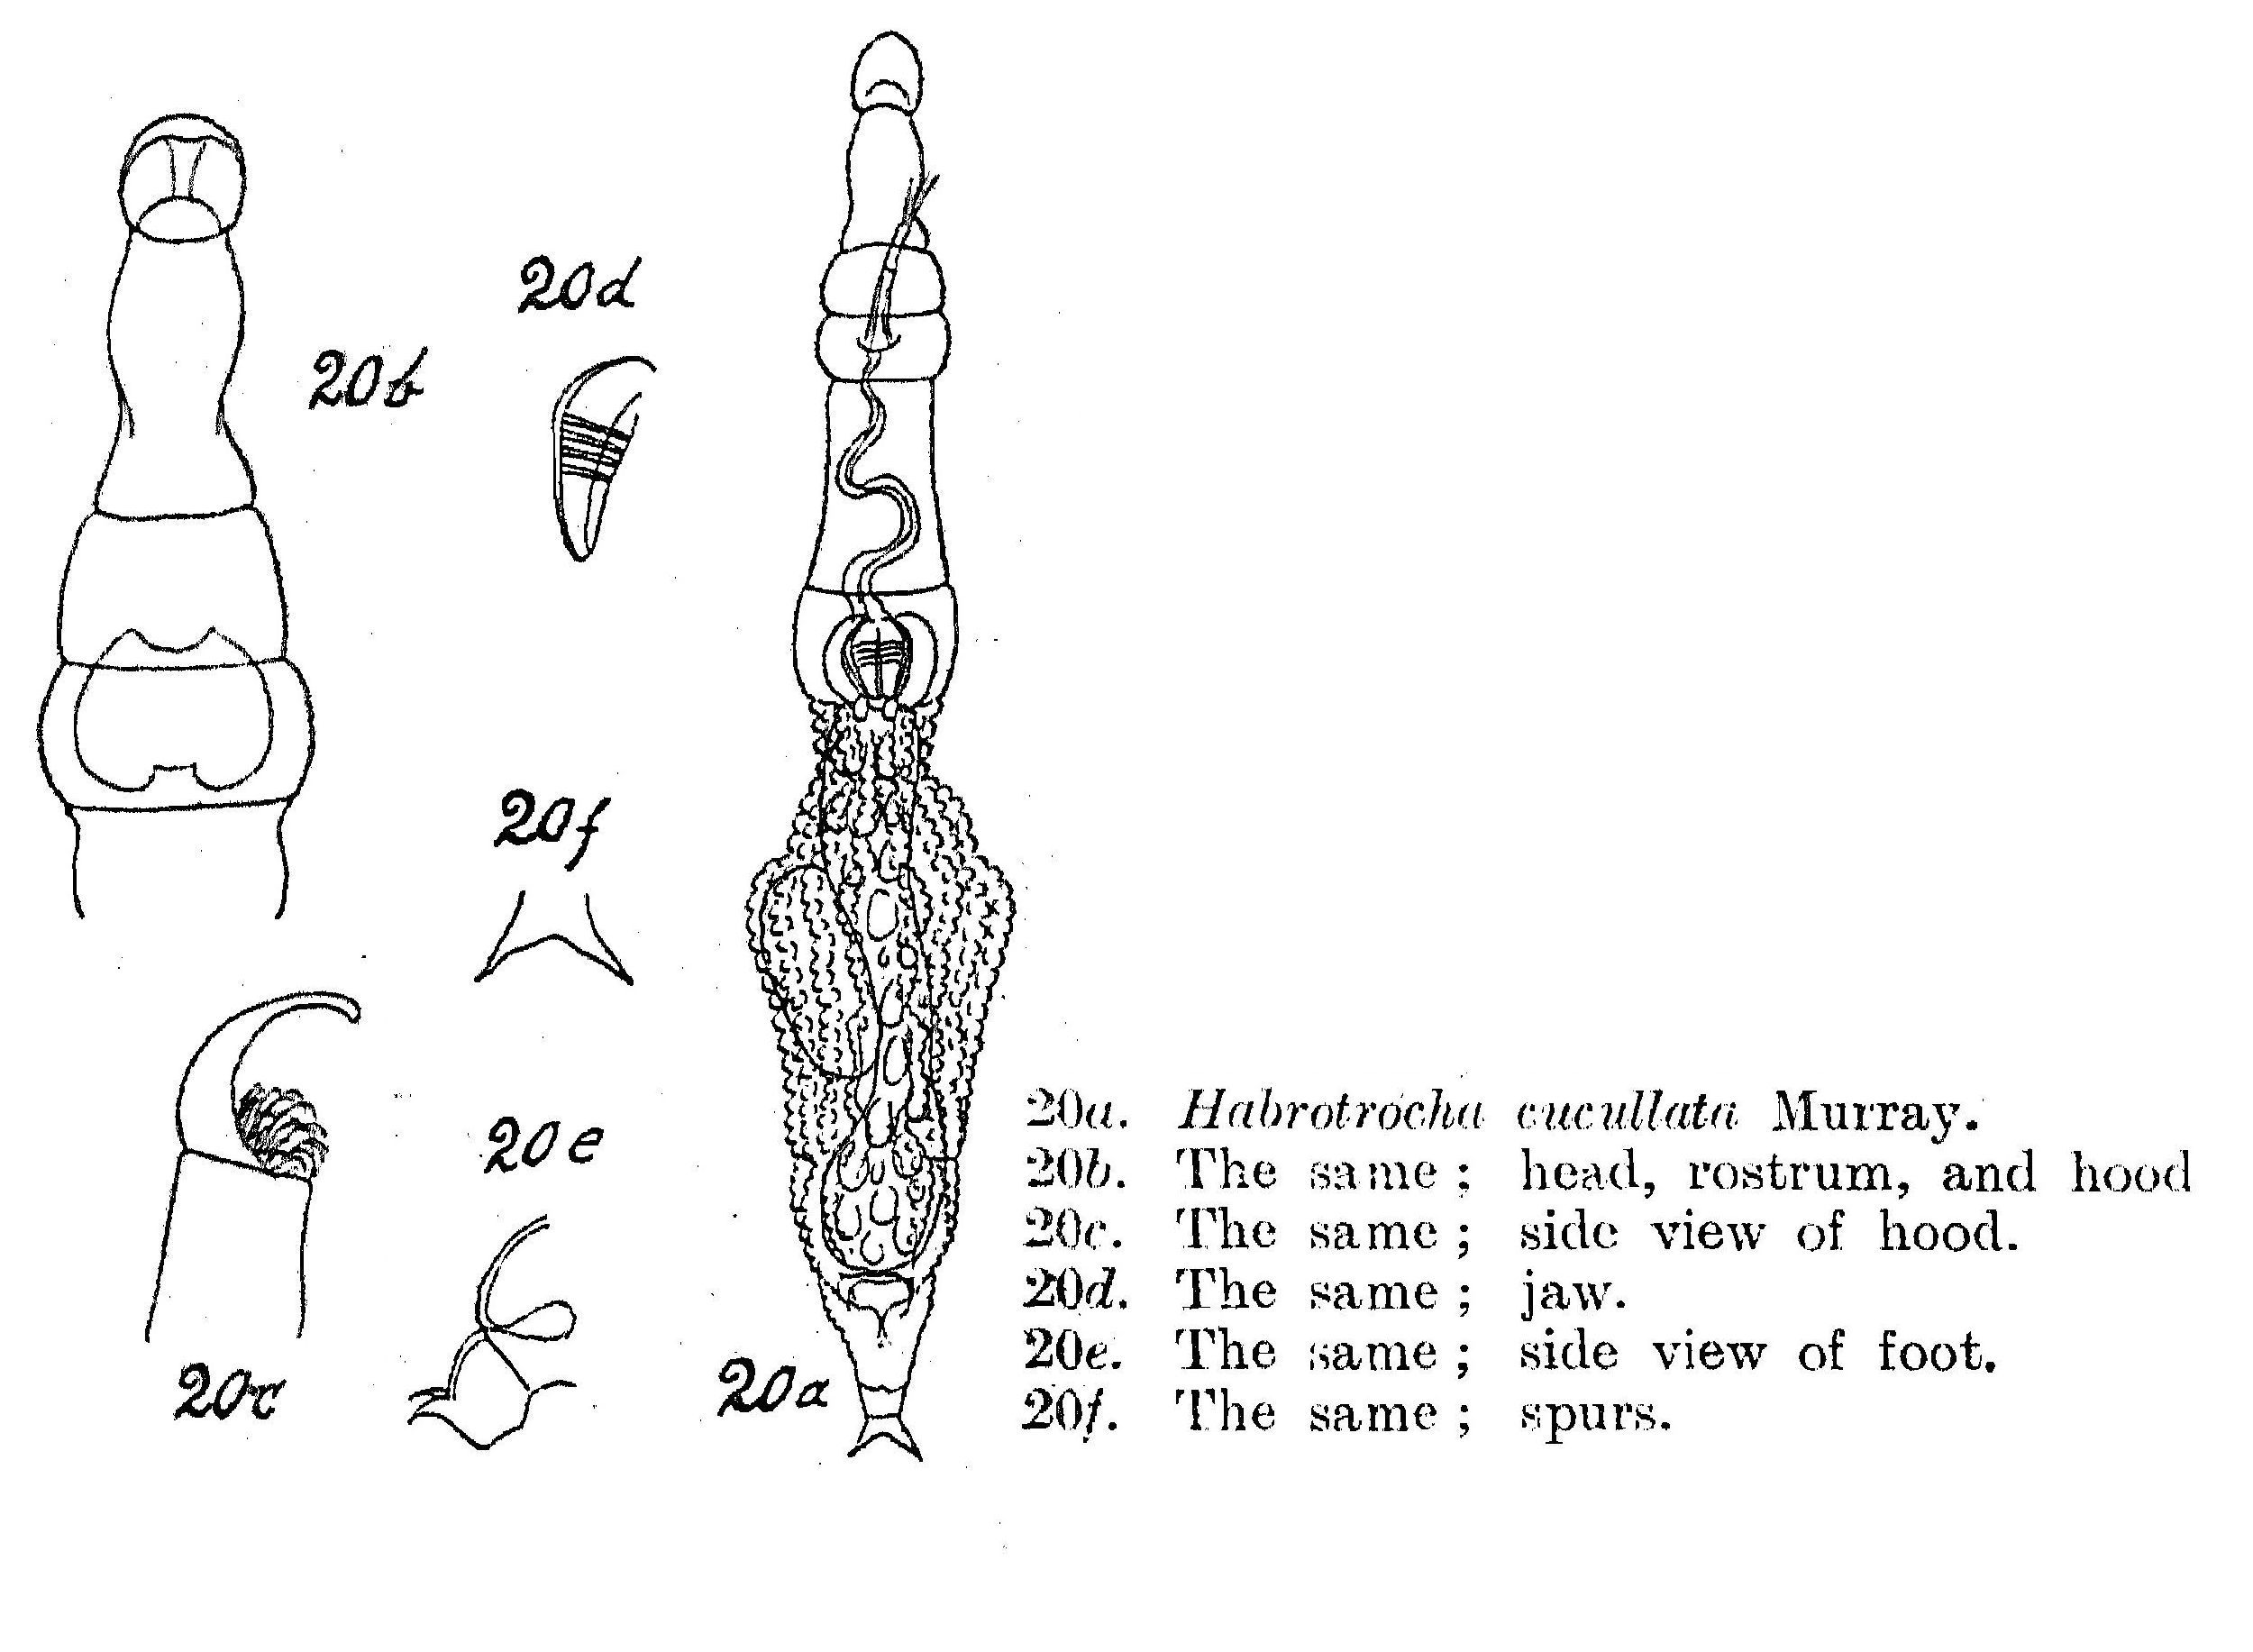 Image of Habrotrocha cucullata Murray 1911